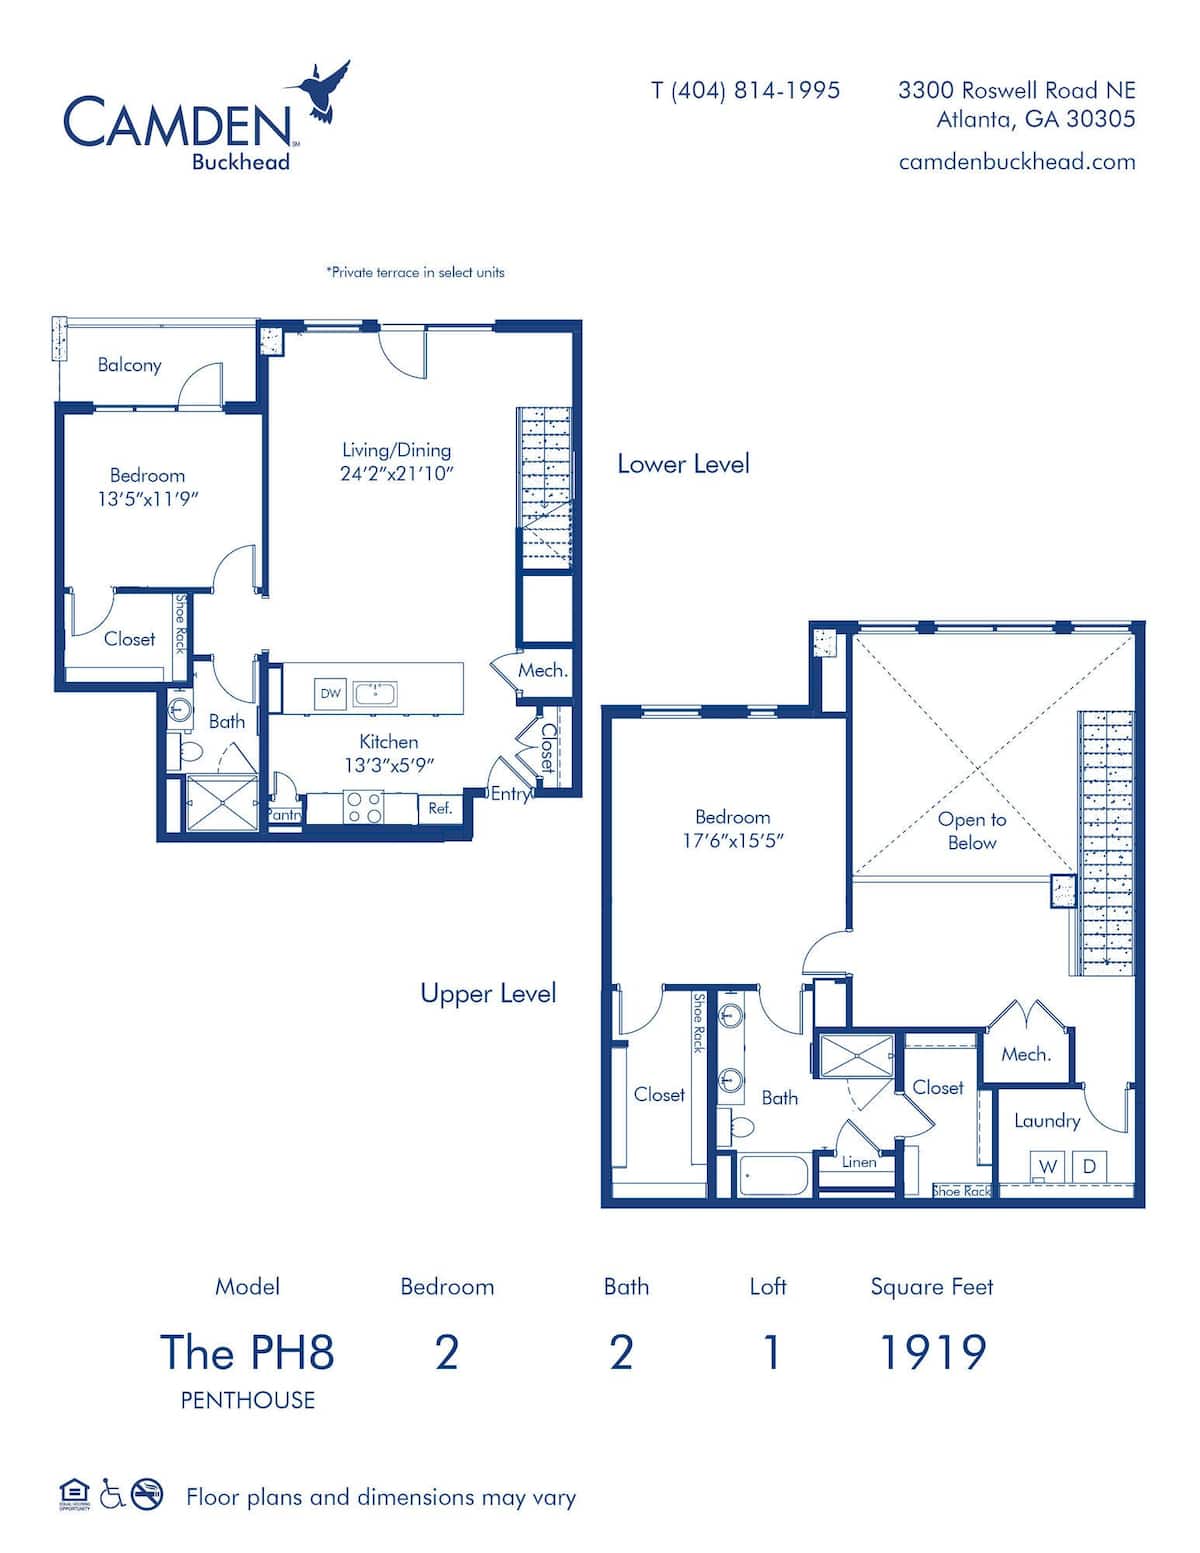 Floorplan diagram for The PH8, showing 1 bedroom